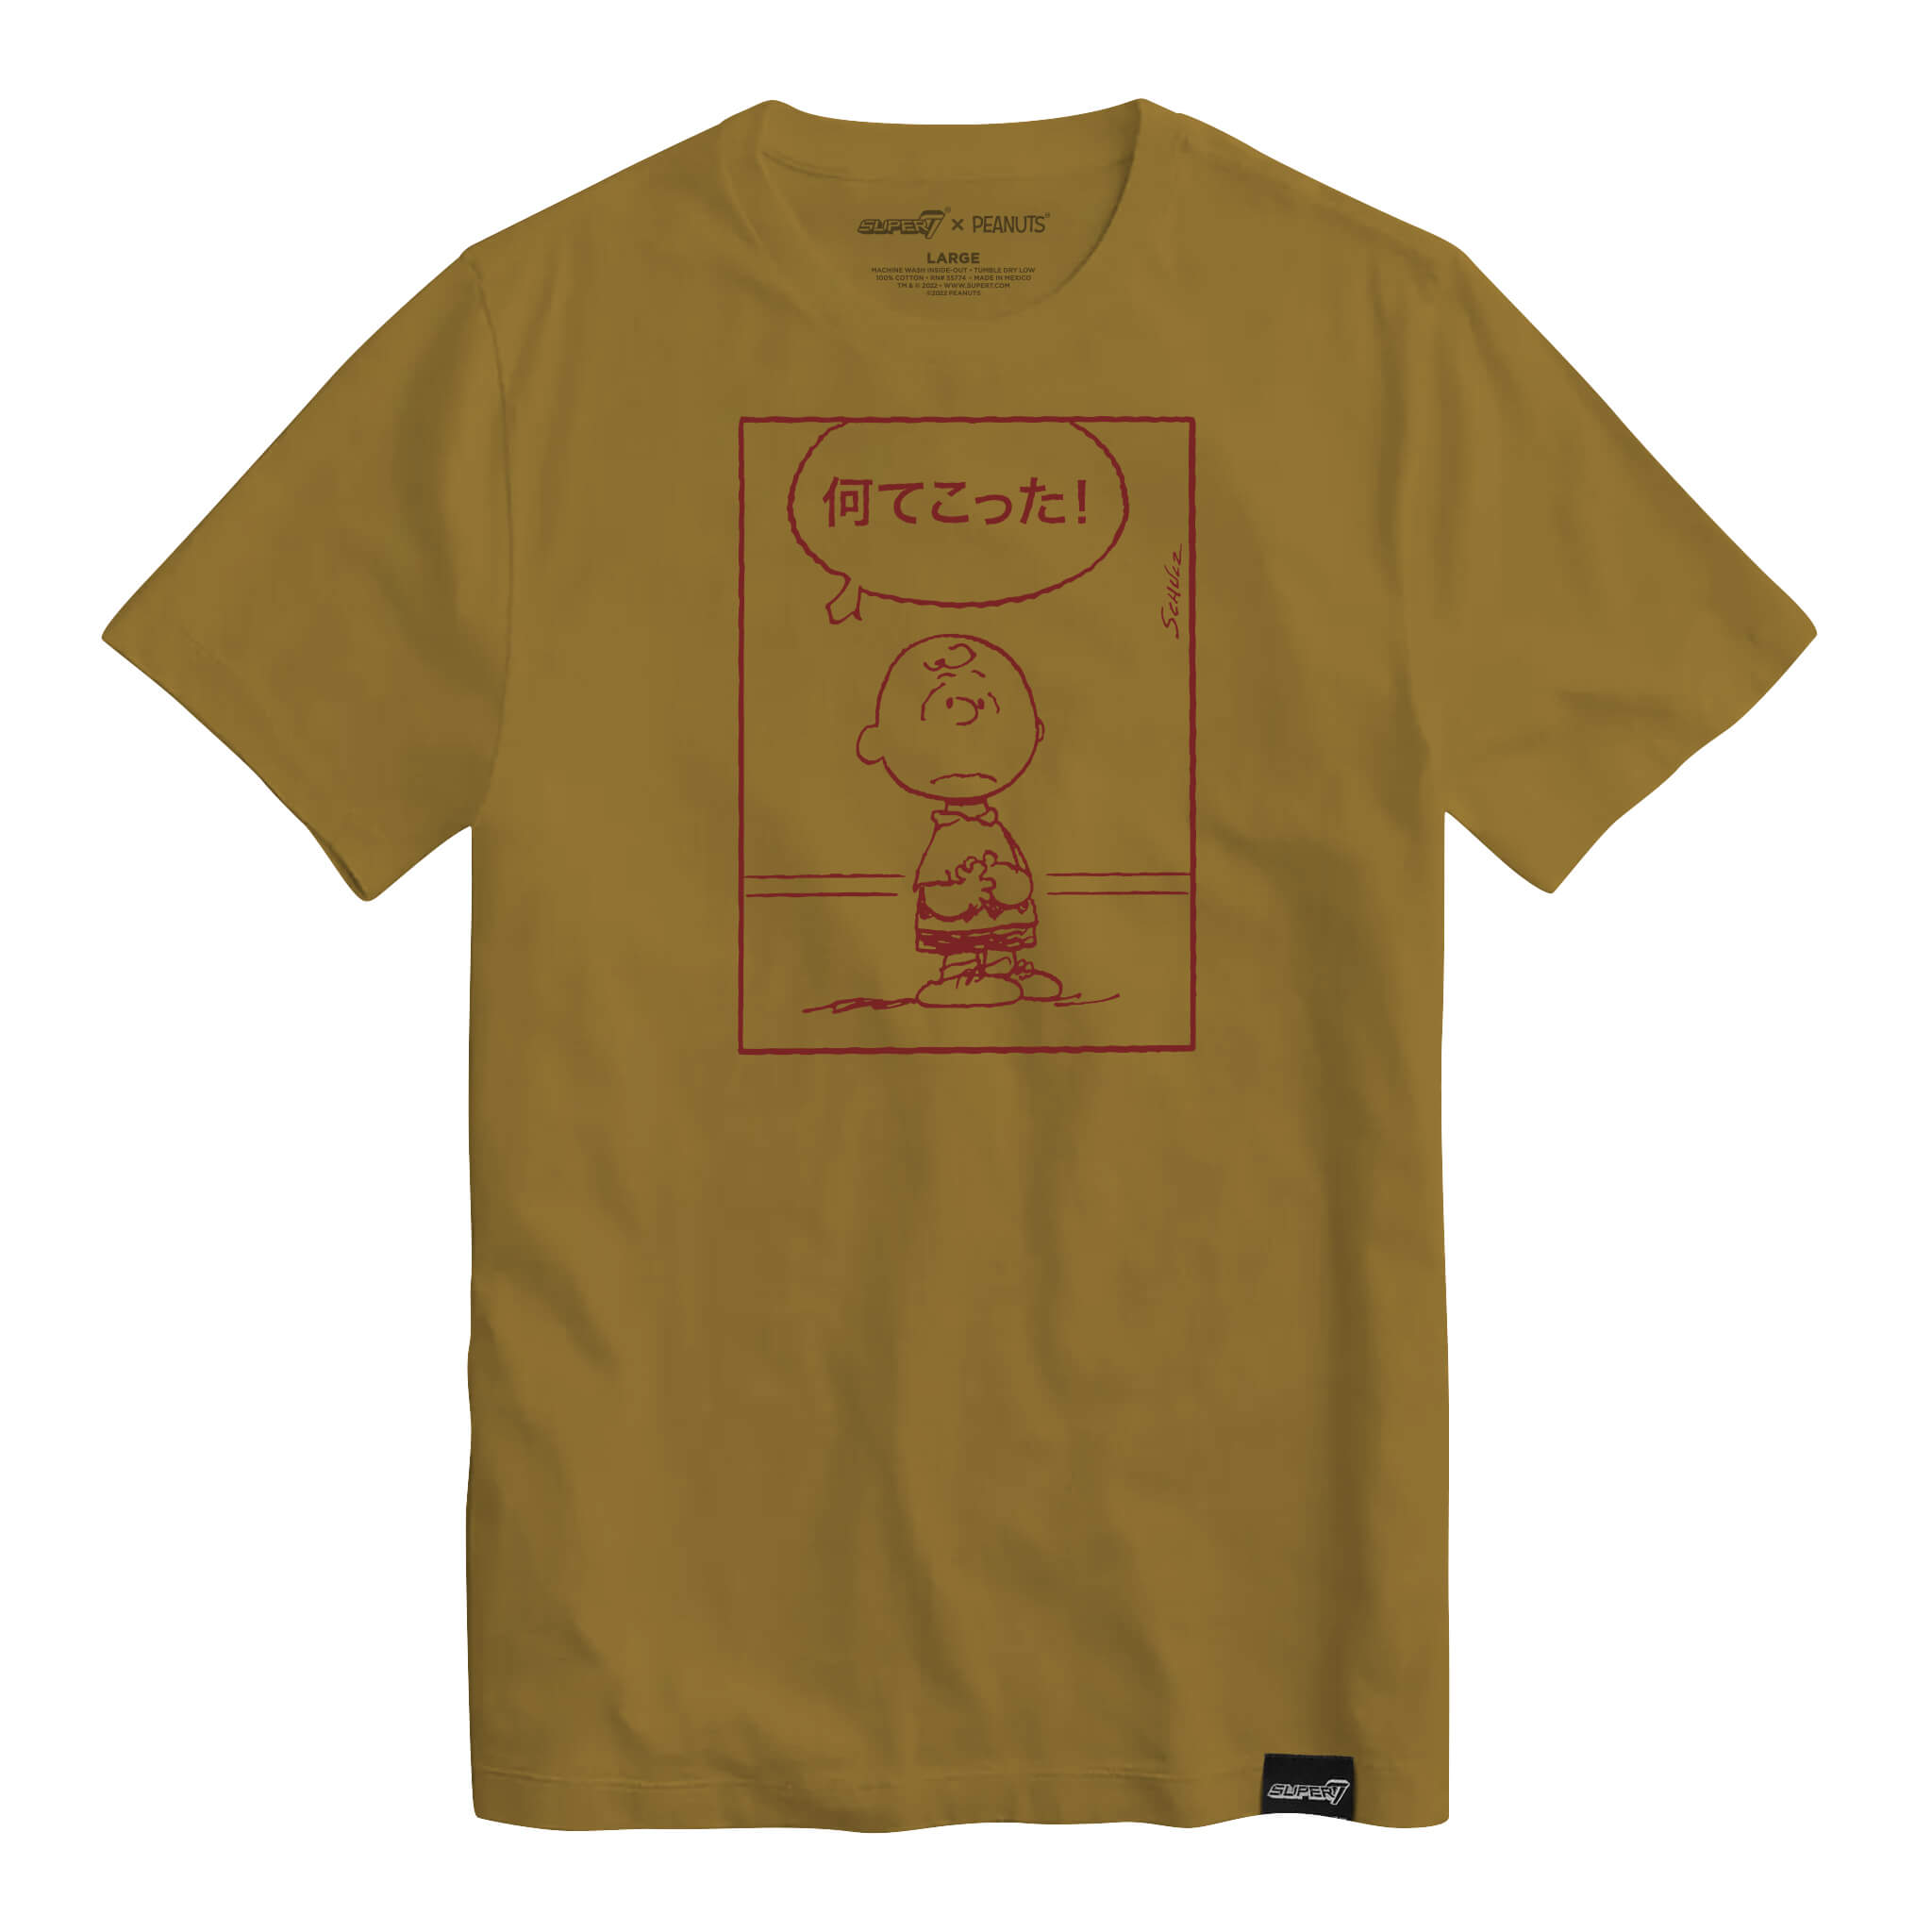 Peanuts T-Shirt - Good Grief Japan (Antique Gold)